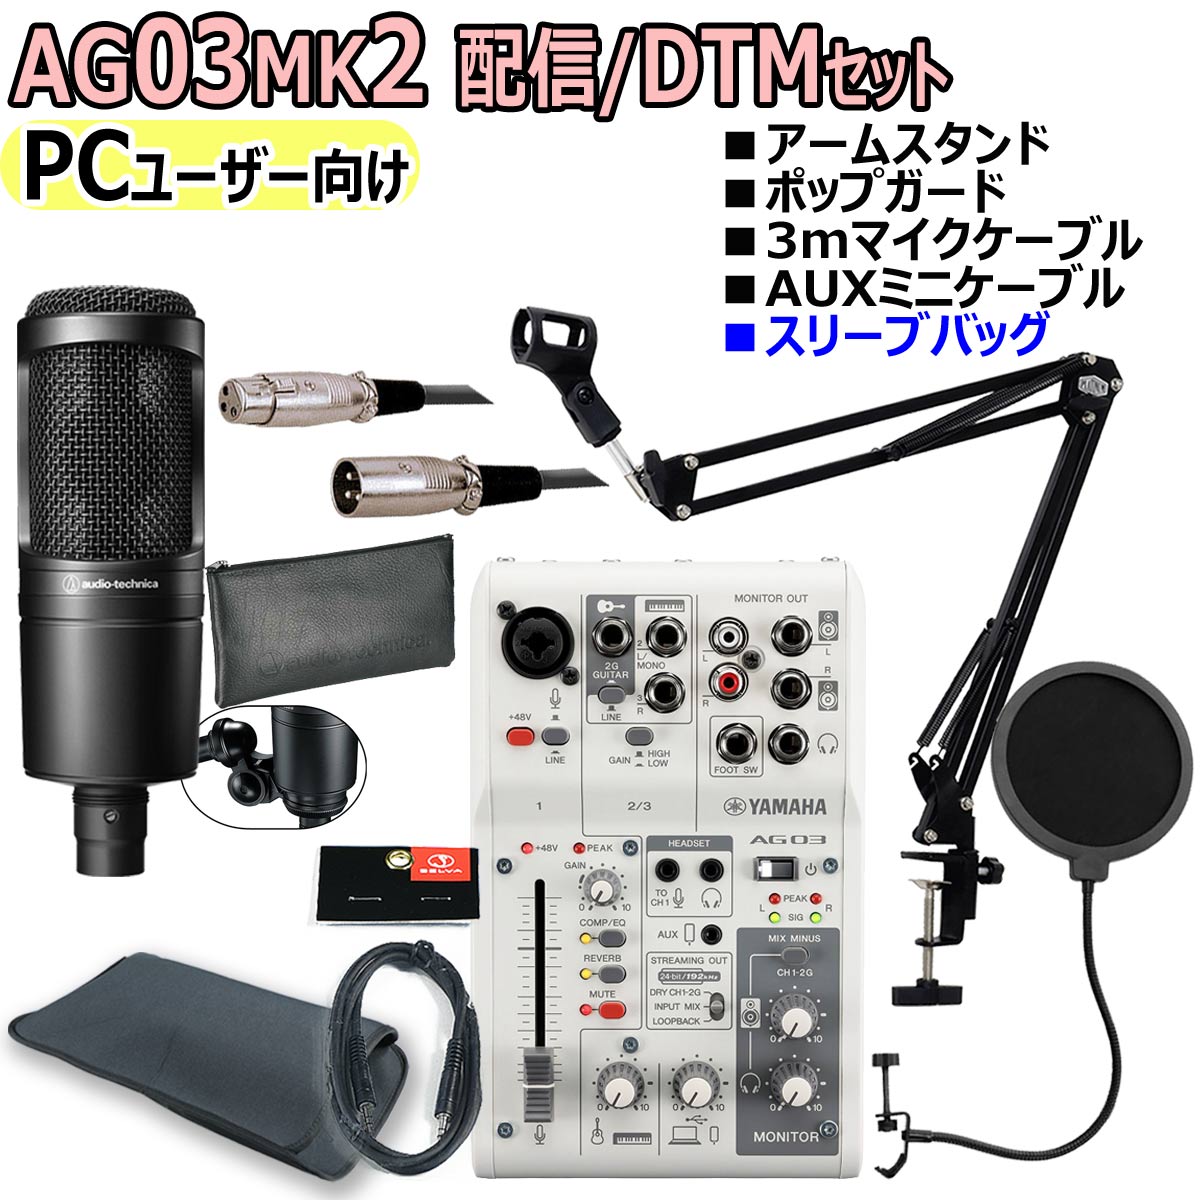 YAMAHA / AG03MK2 WHITE AT2020 PCユーザー向け 配信/DTMセット